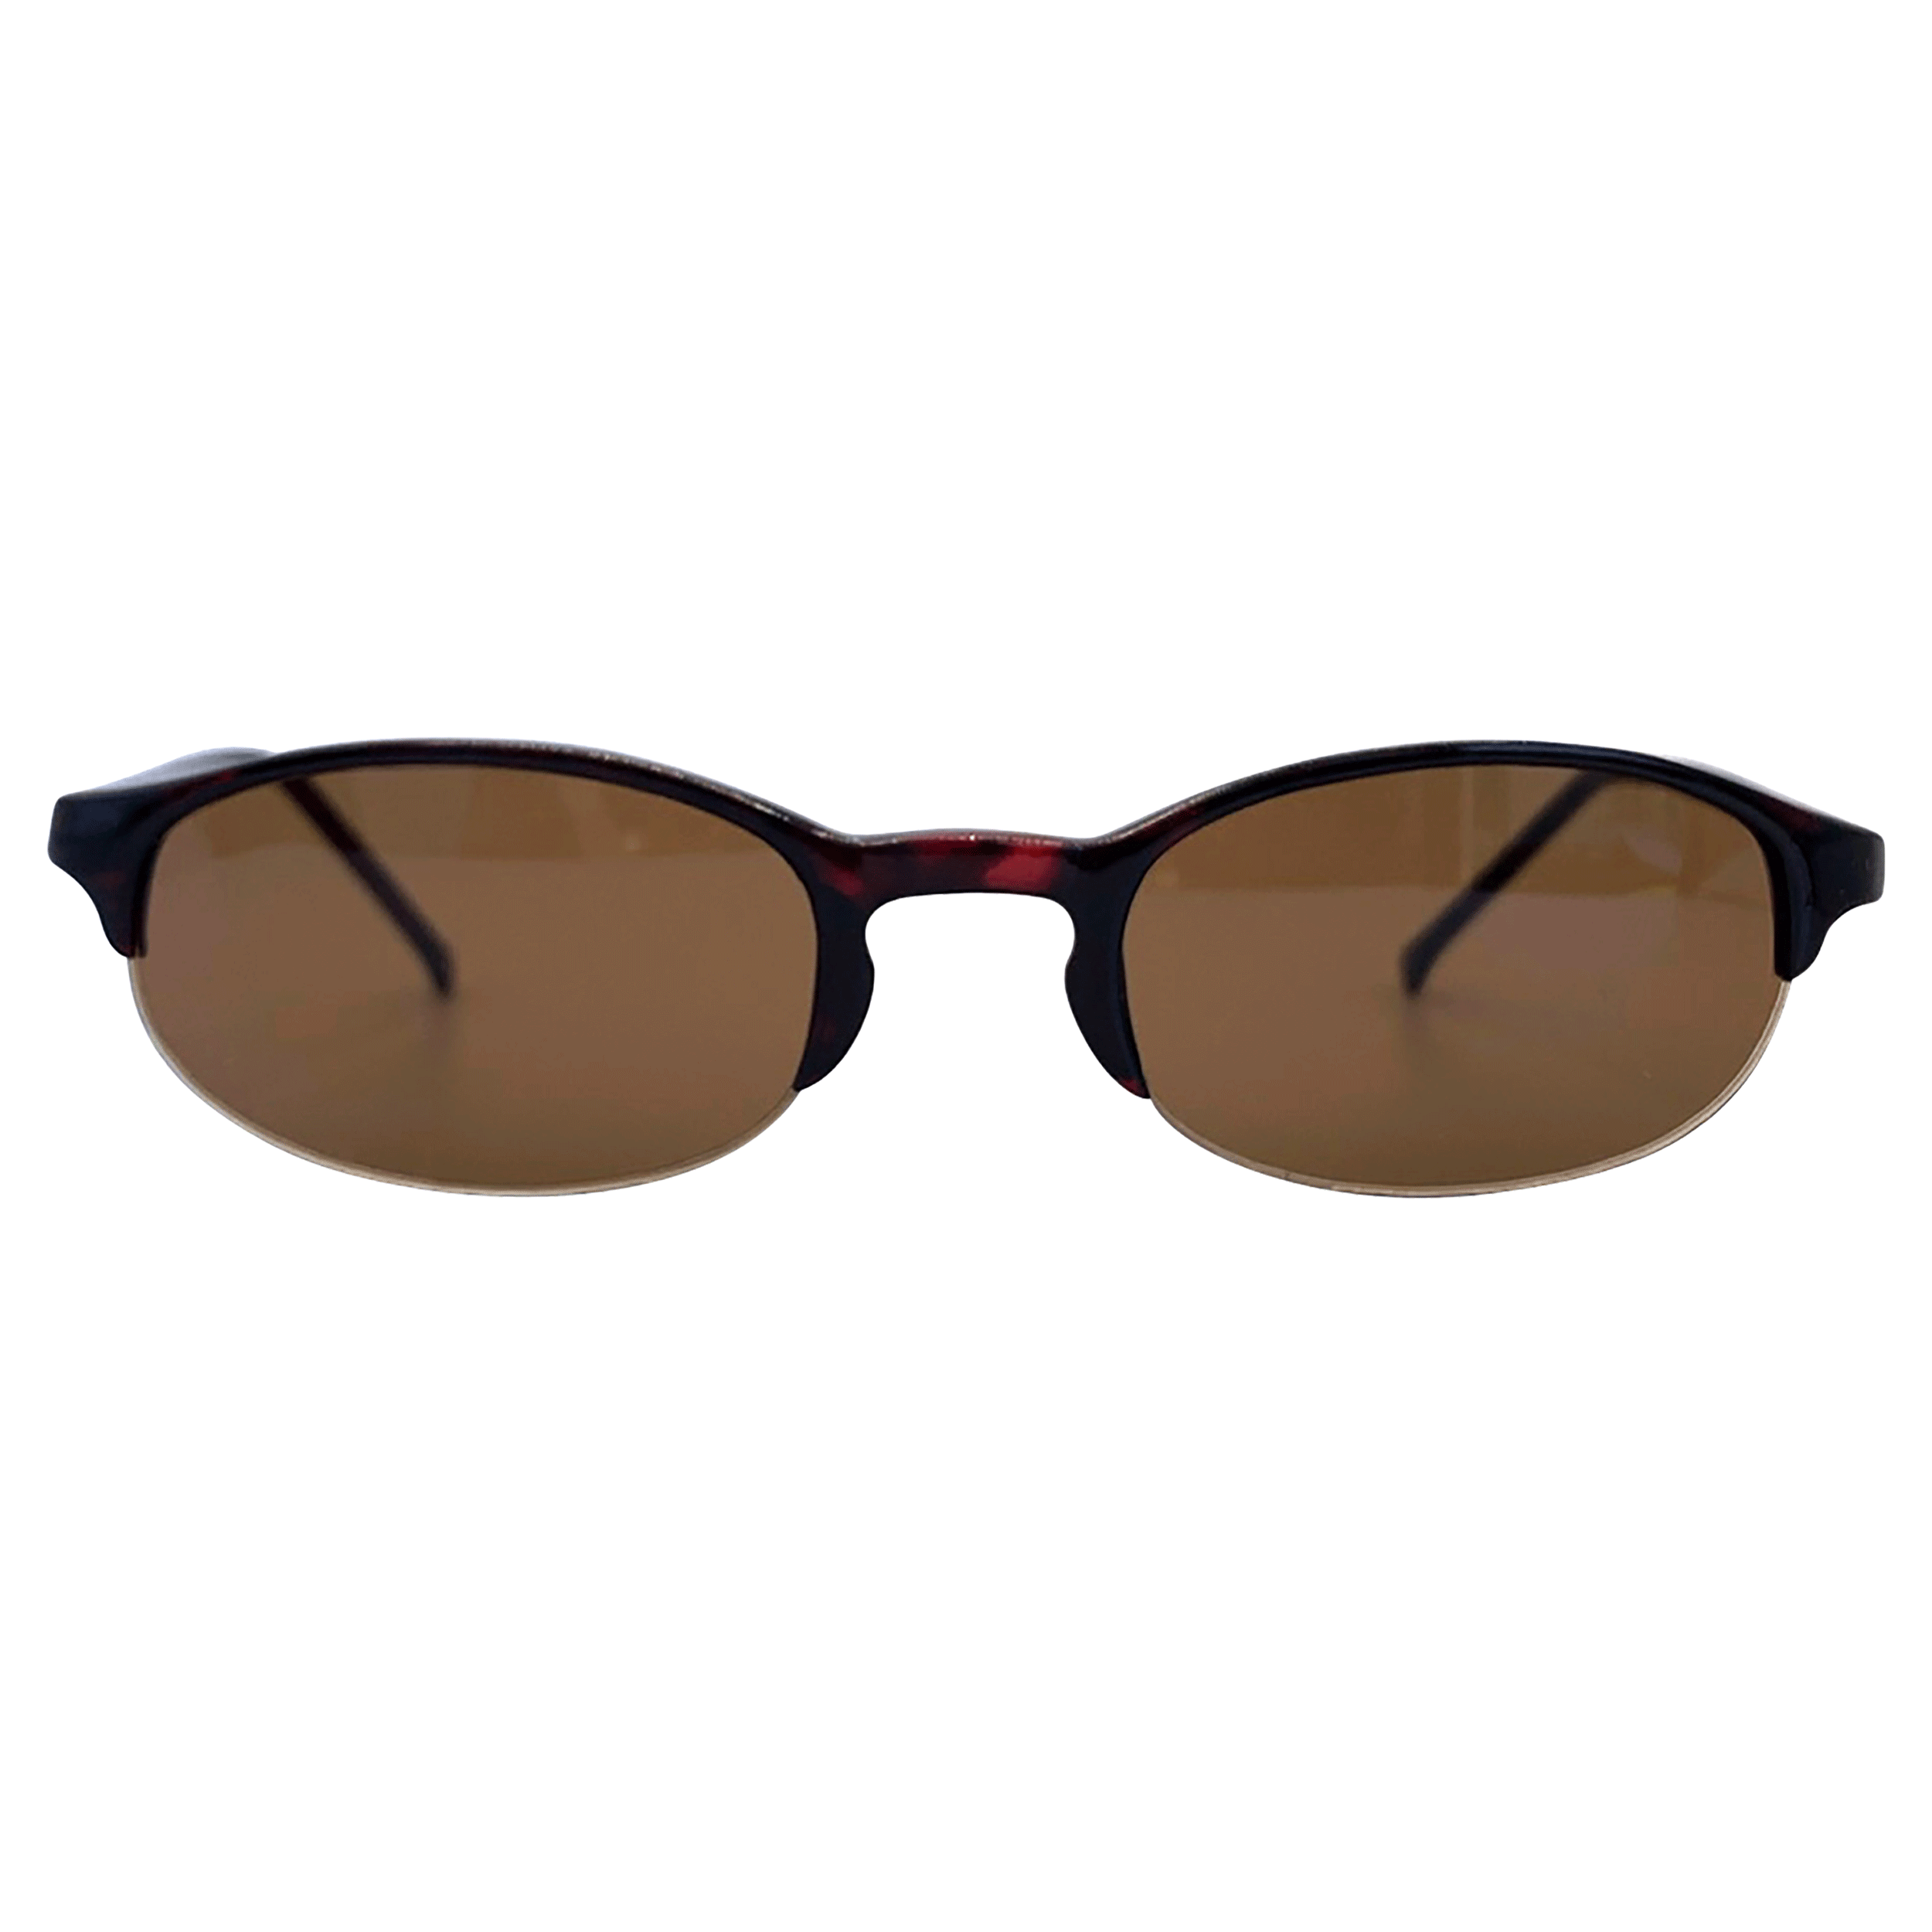 HOFF Tortoise/Brown Rimless Sunglasses